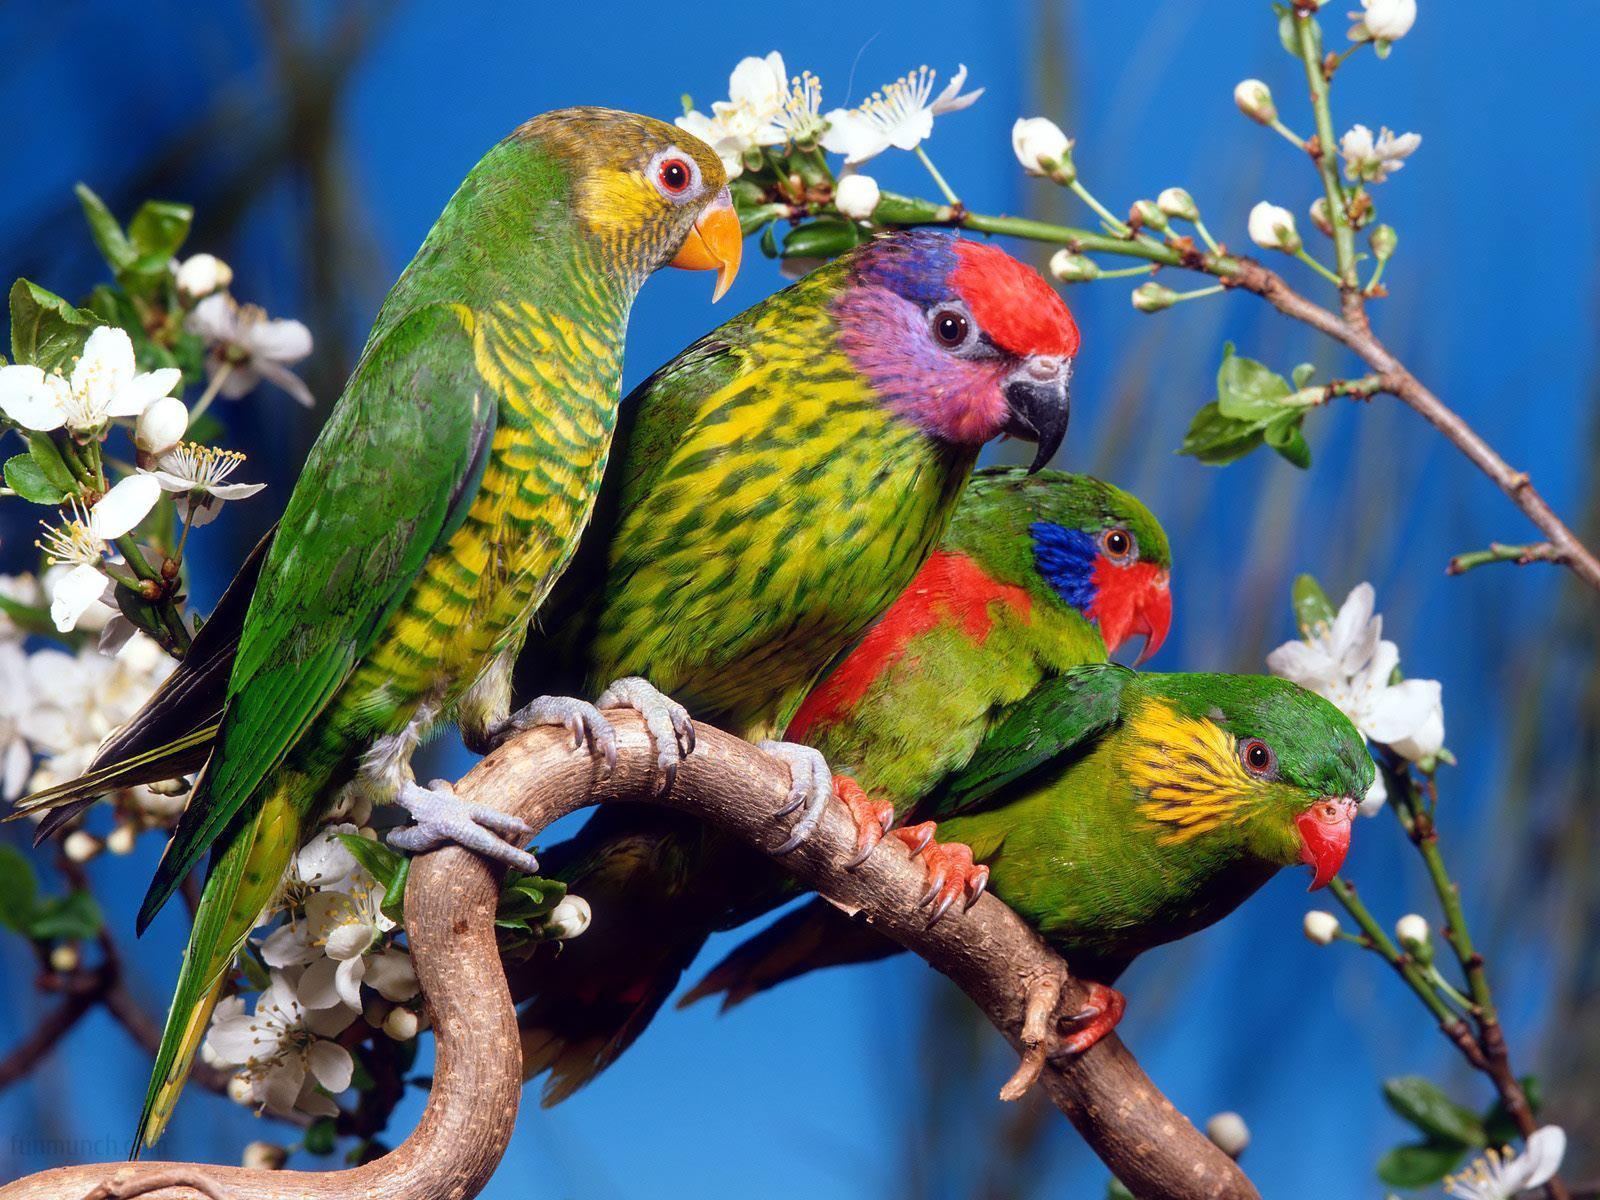 Beautiful Nature Love Birds Widescreen 2 HD Wallpapercom